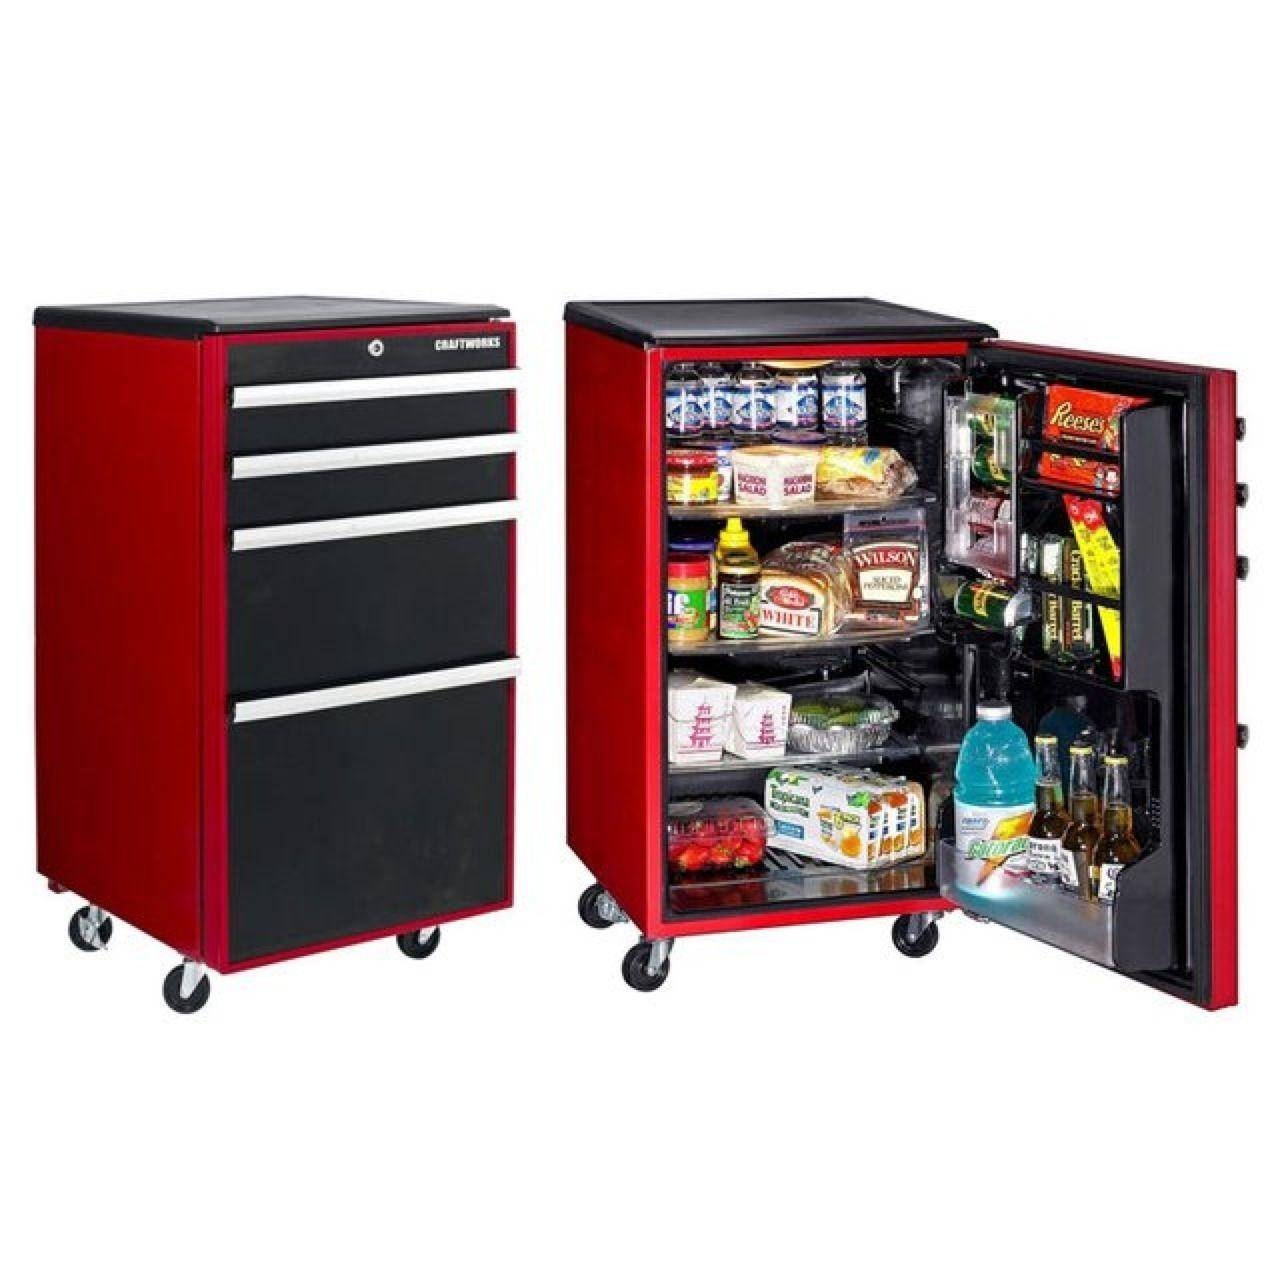 Craftworks toolbox garage refrigerator 1